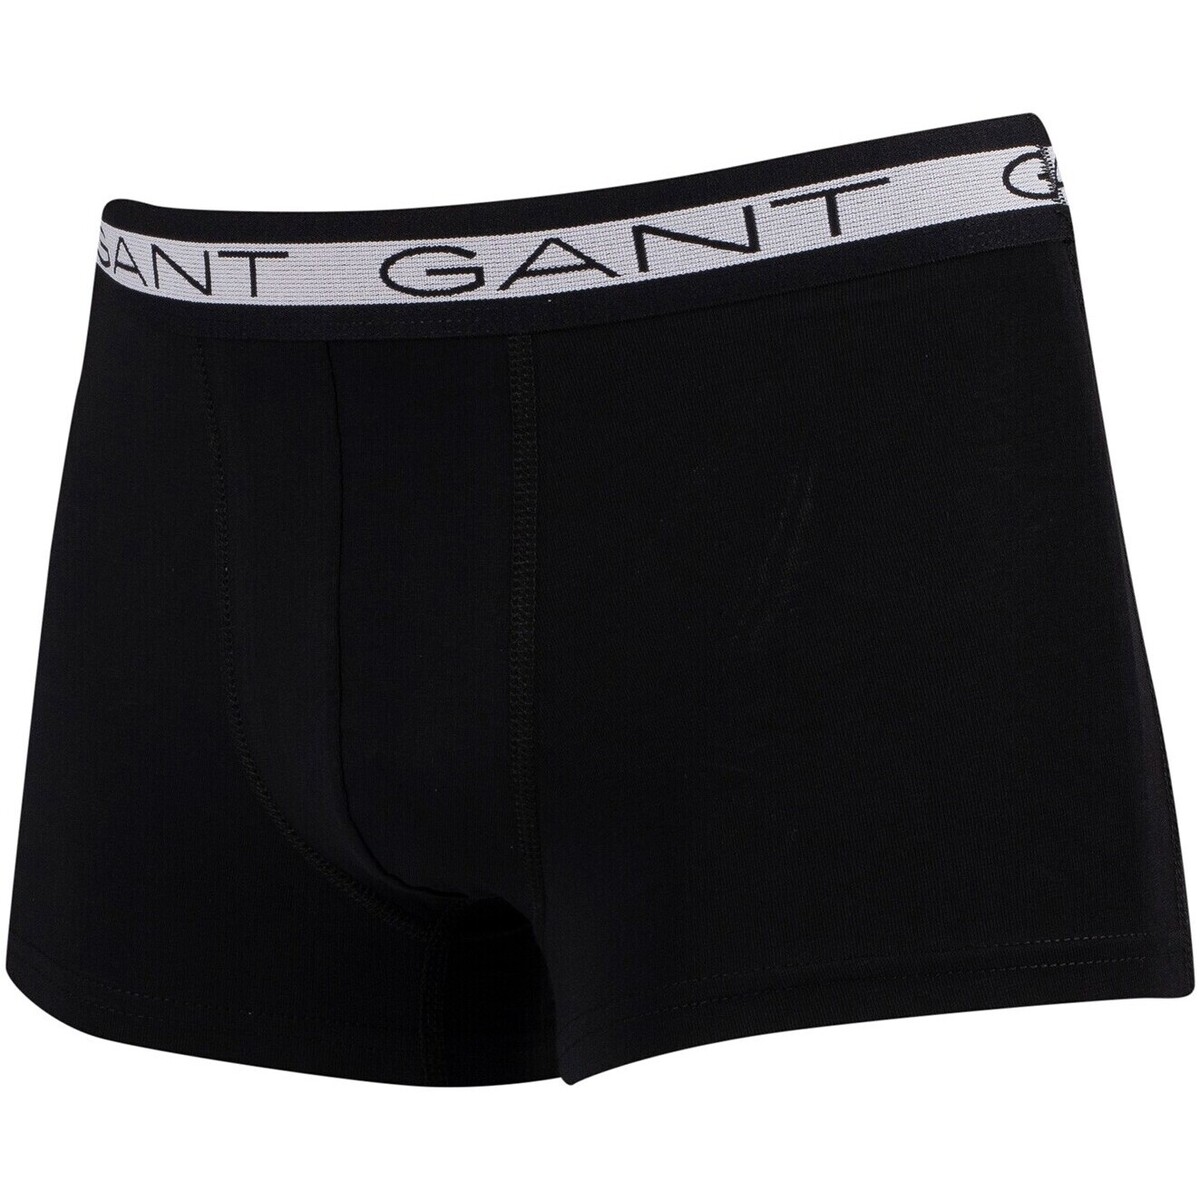 Gant Noir Lot de 5 malles basiques EN8uyBQ3